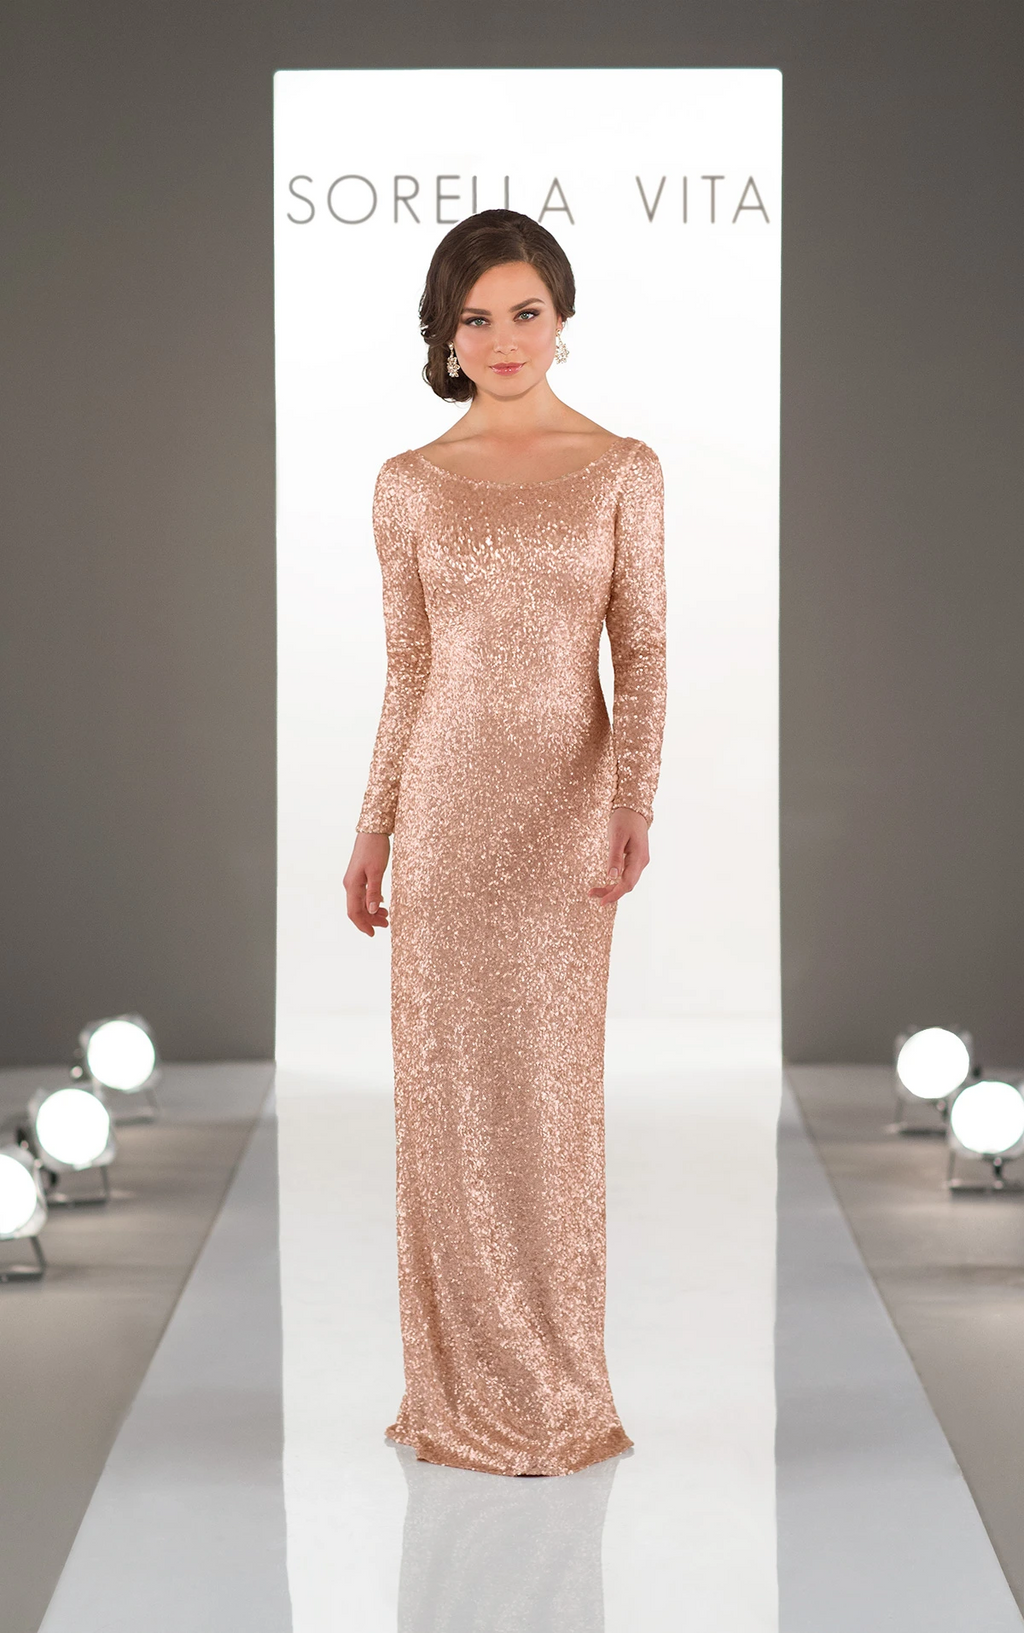 Sorella Vita Dress Style 8848 (Gold-Size 12) Prom, Ball., Black-tie, Bridesmaid, Pageant